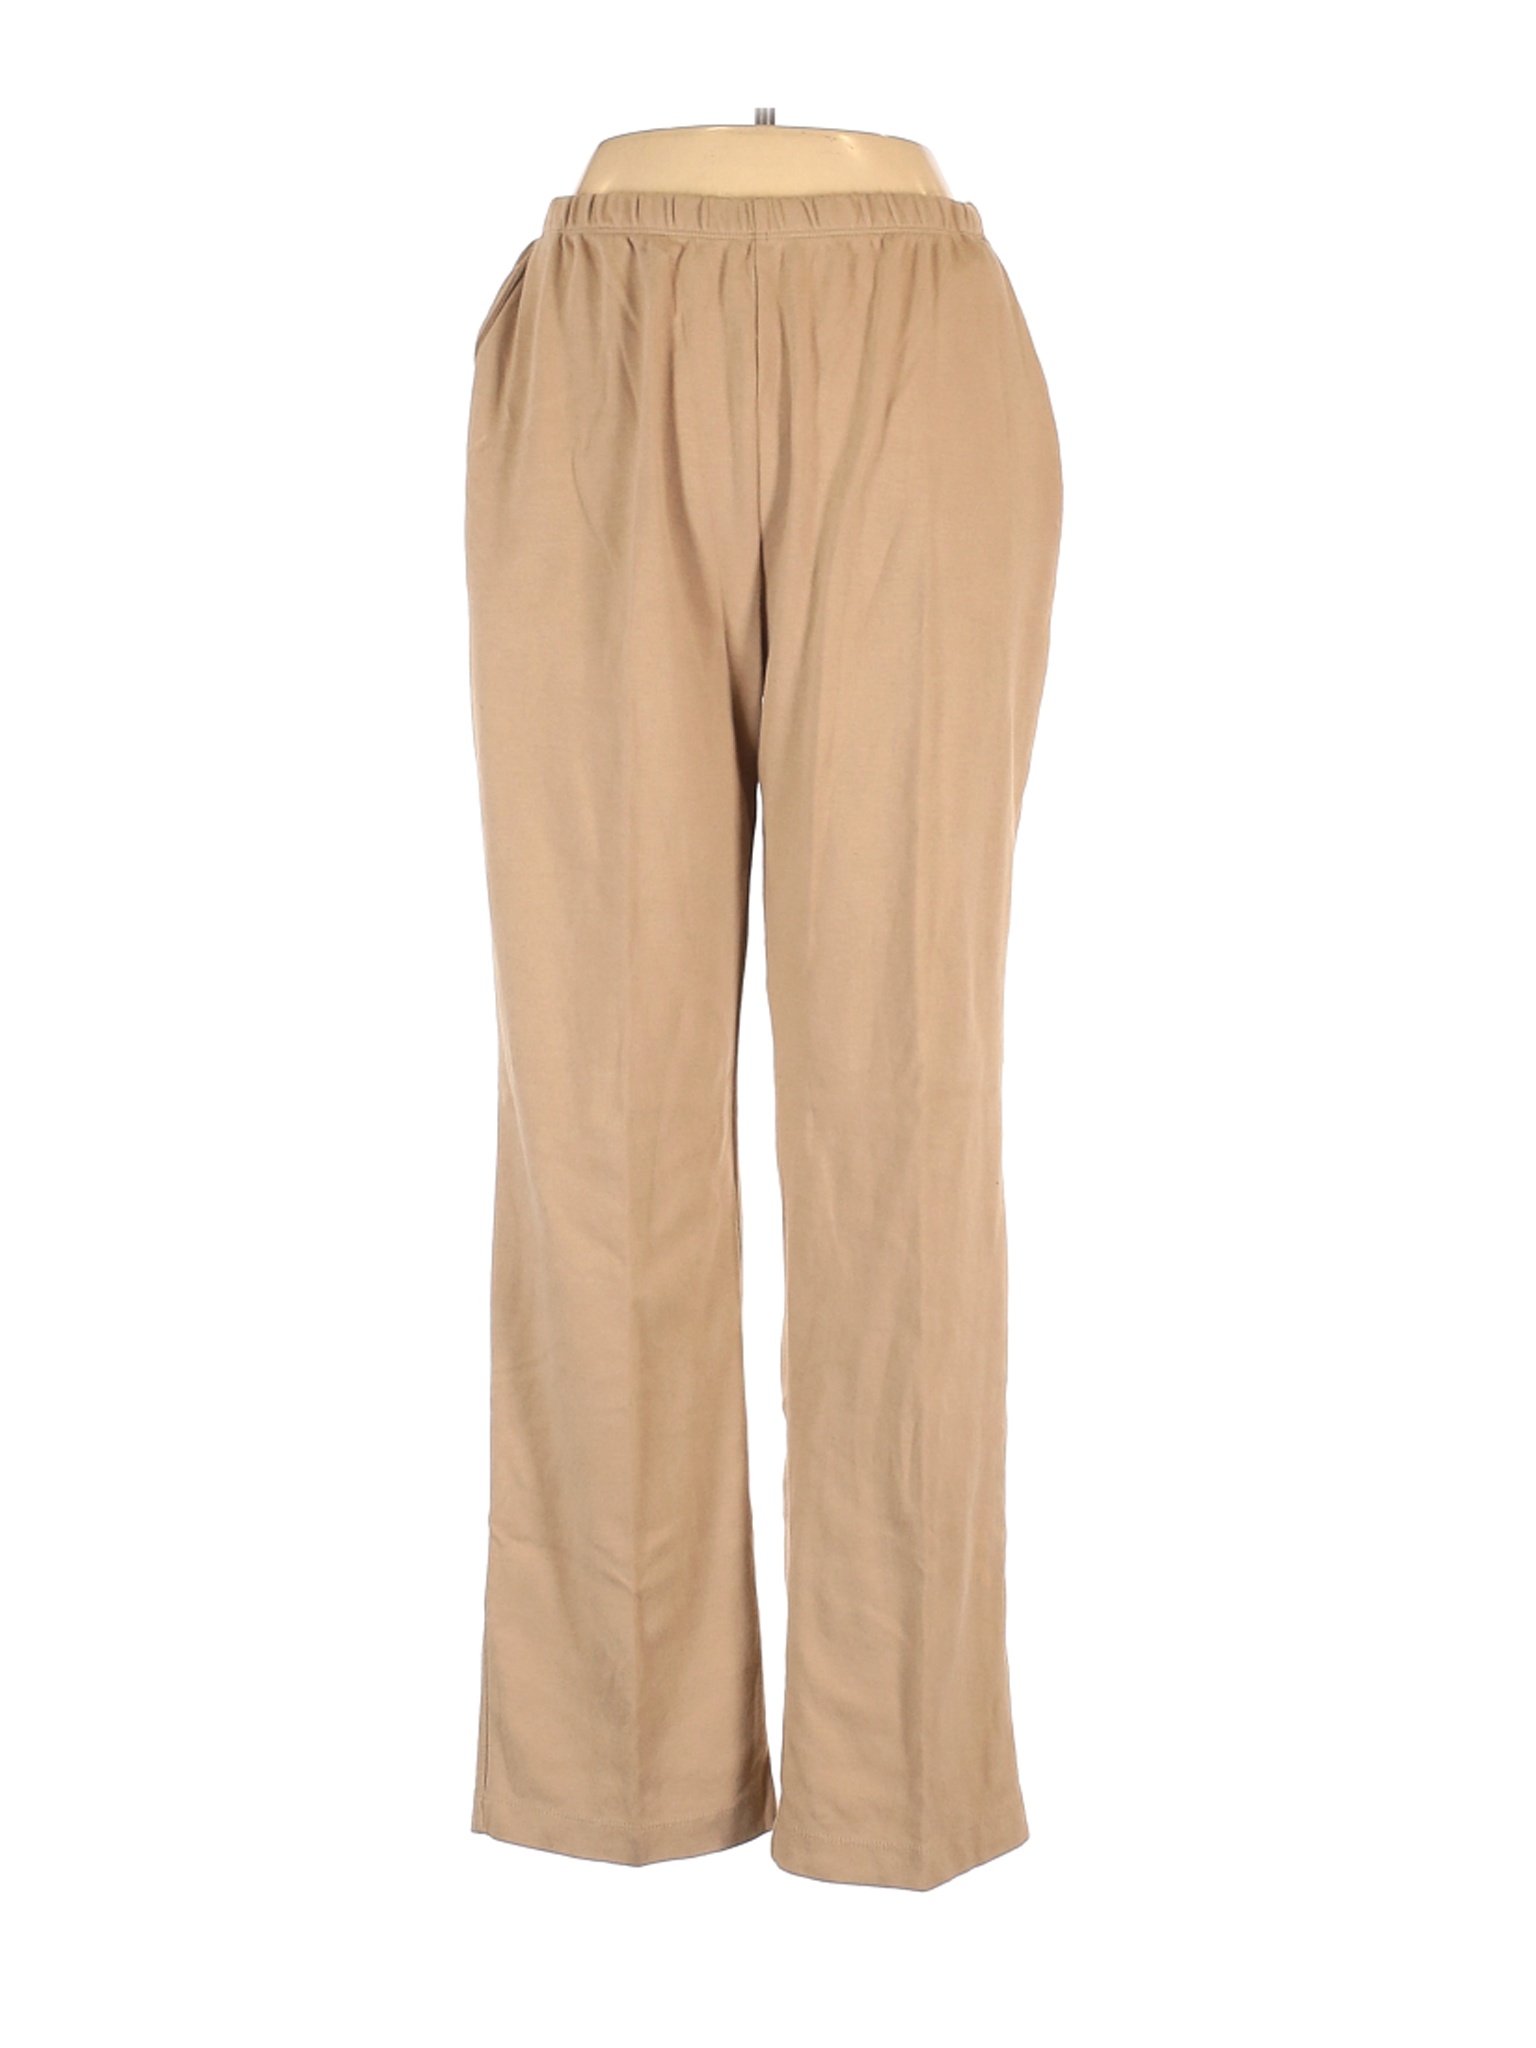 Lands' End Women Brown Casual Pants M | eBay